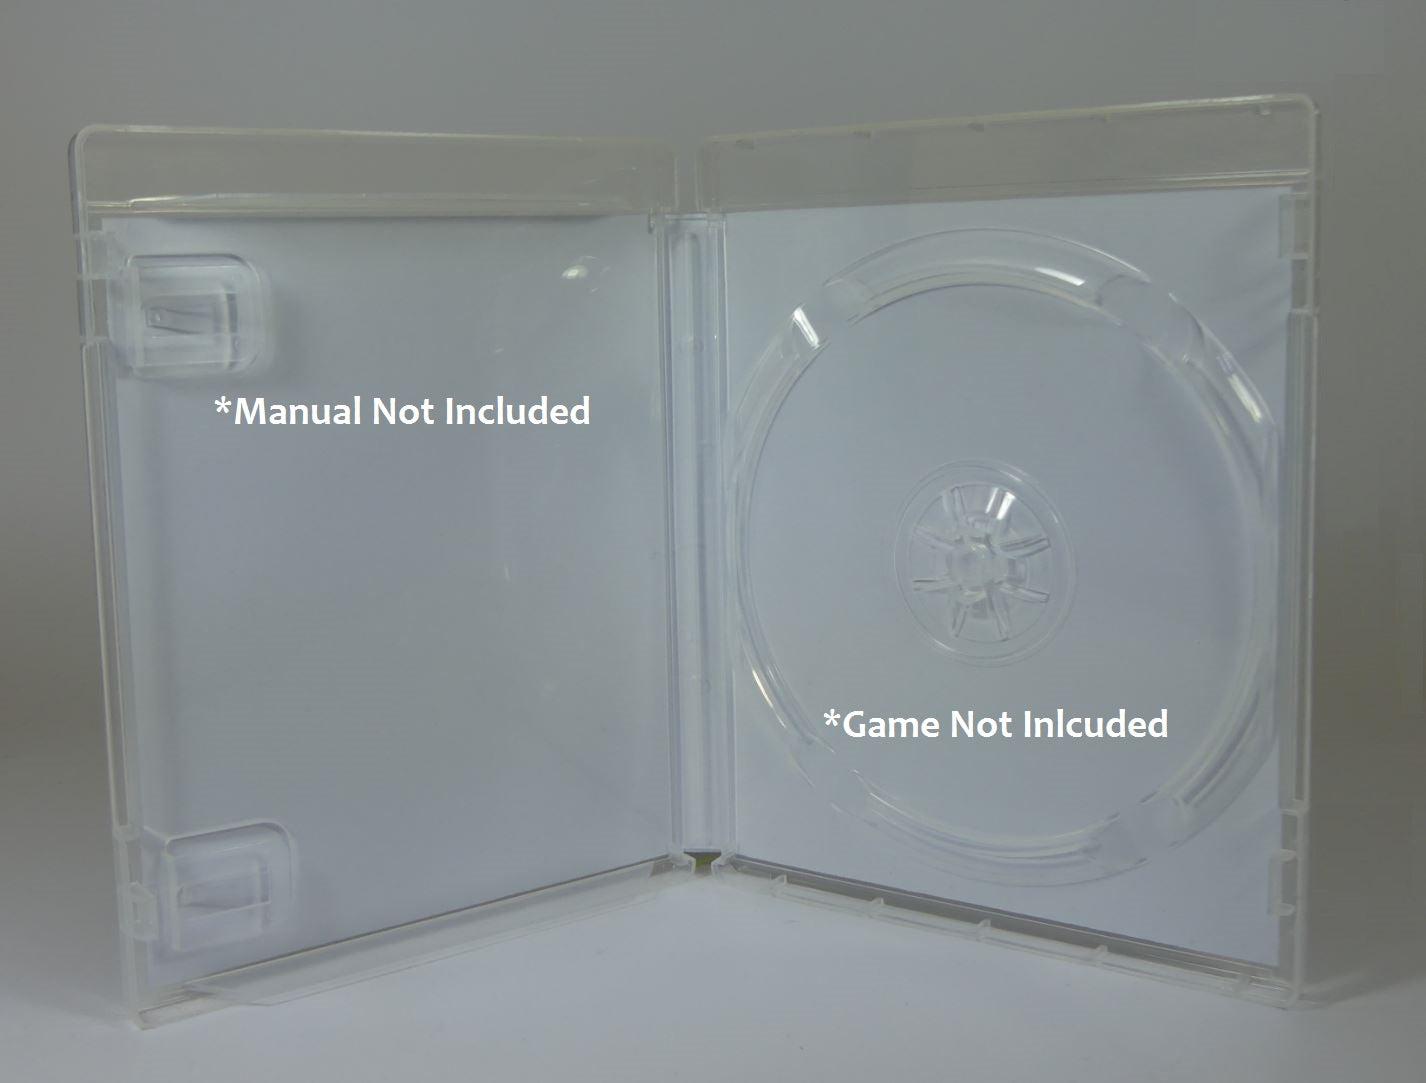 Hitman HD Trilogy - PS3 Replacement Case